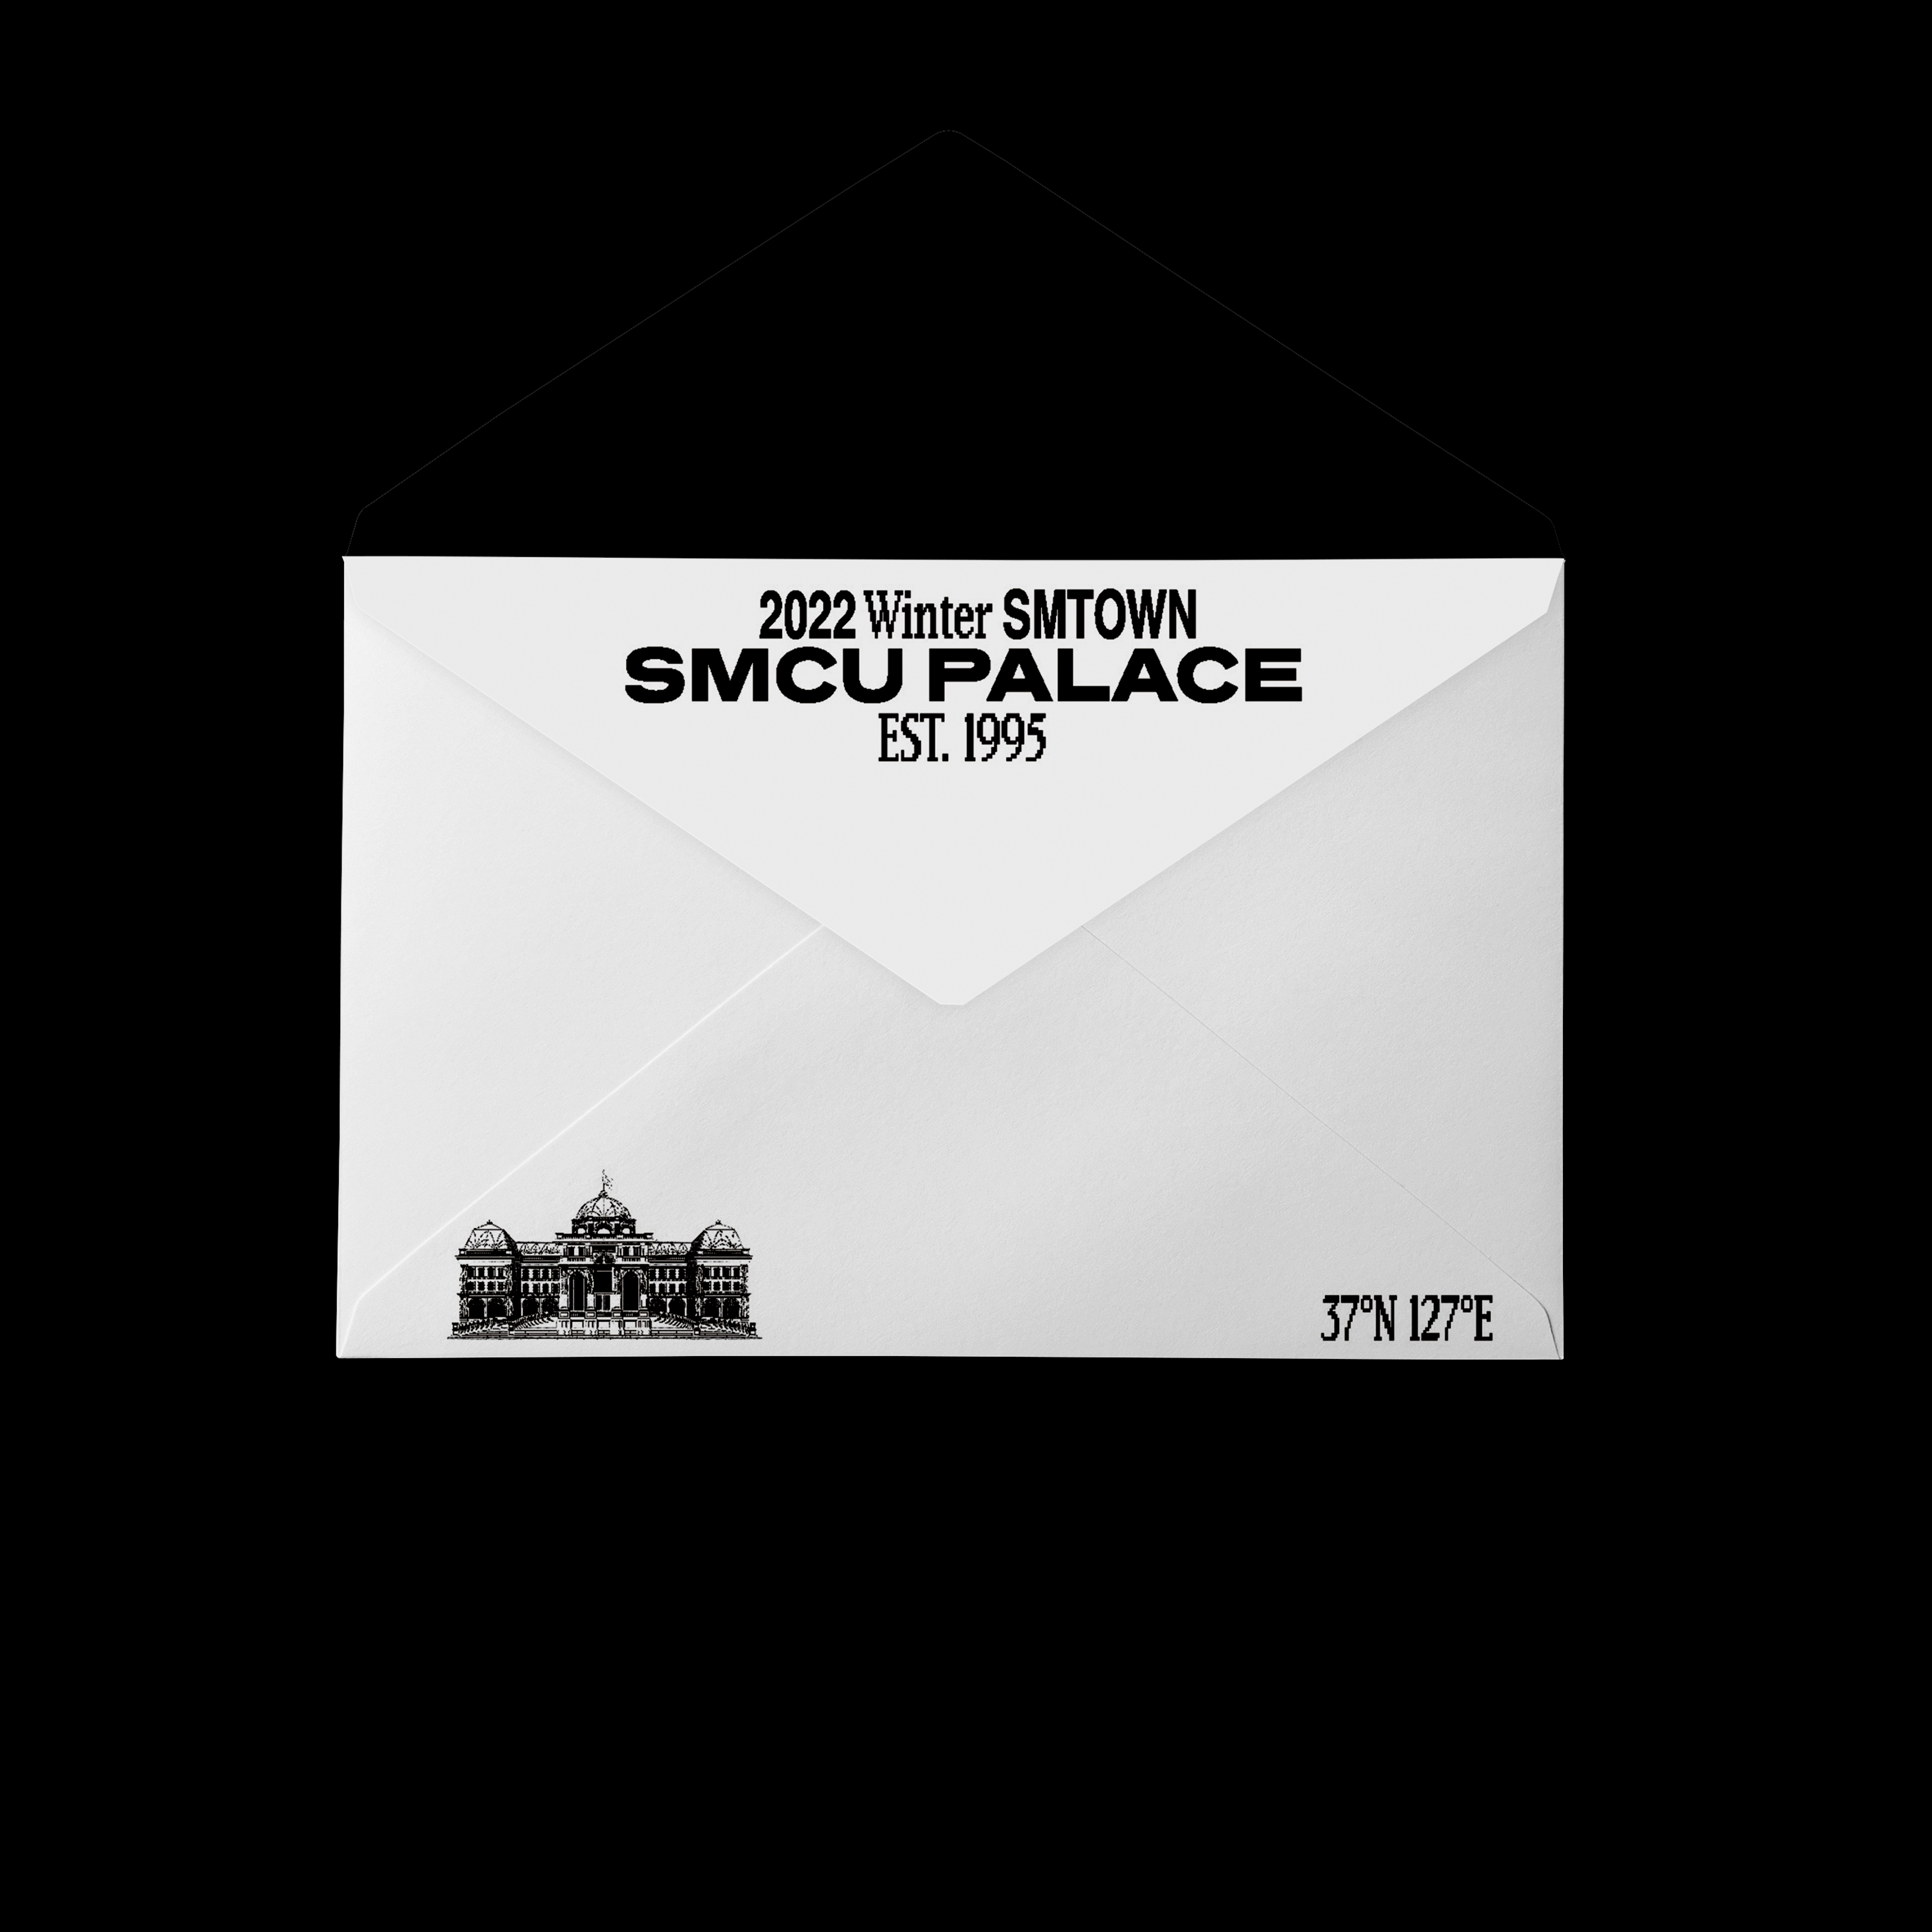 [全款 裸专] NCT 127 - 2022 Winter SMTOWN : SMCU PALACE (GUEST. NCT 127) (Membership Card Ver.) _道英吧_DoYoungBar